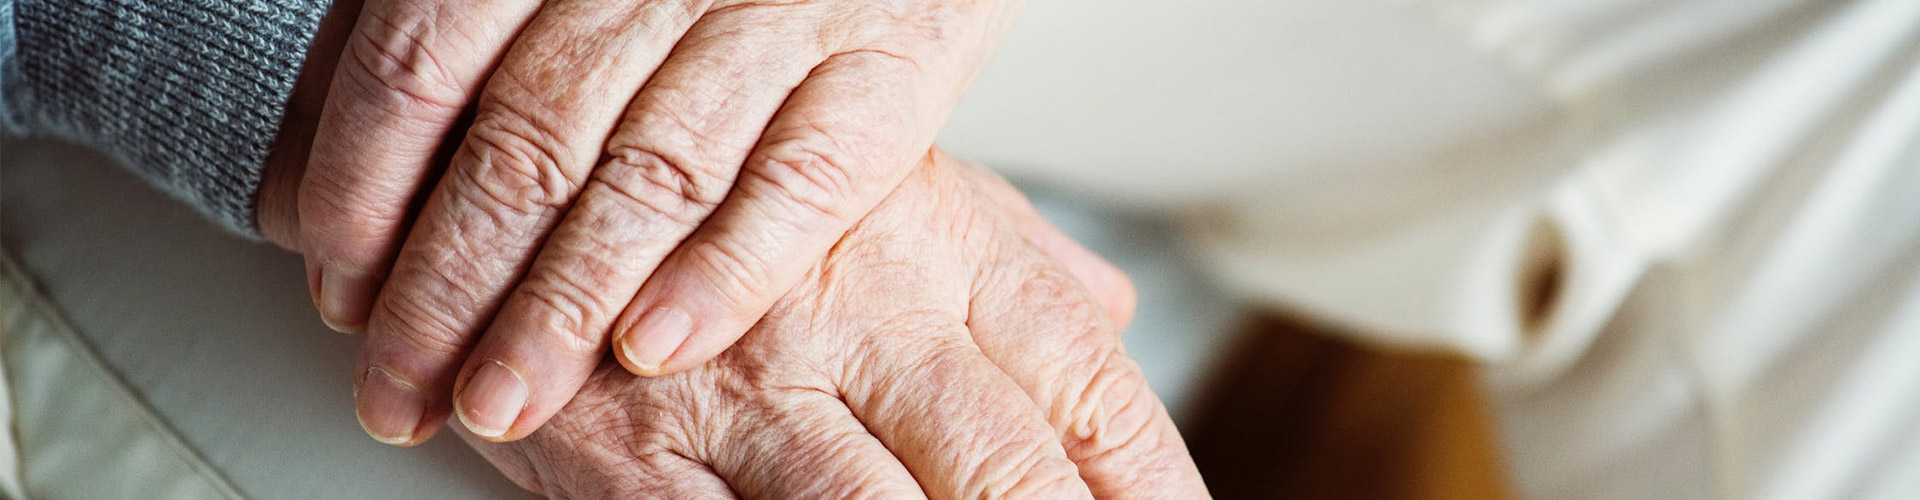 elderly hands nursing home abuse